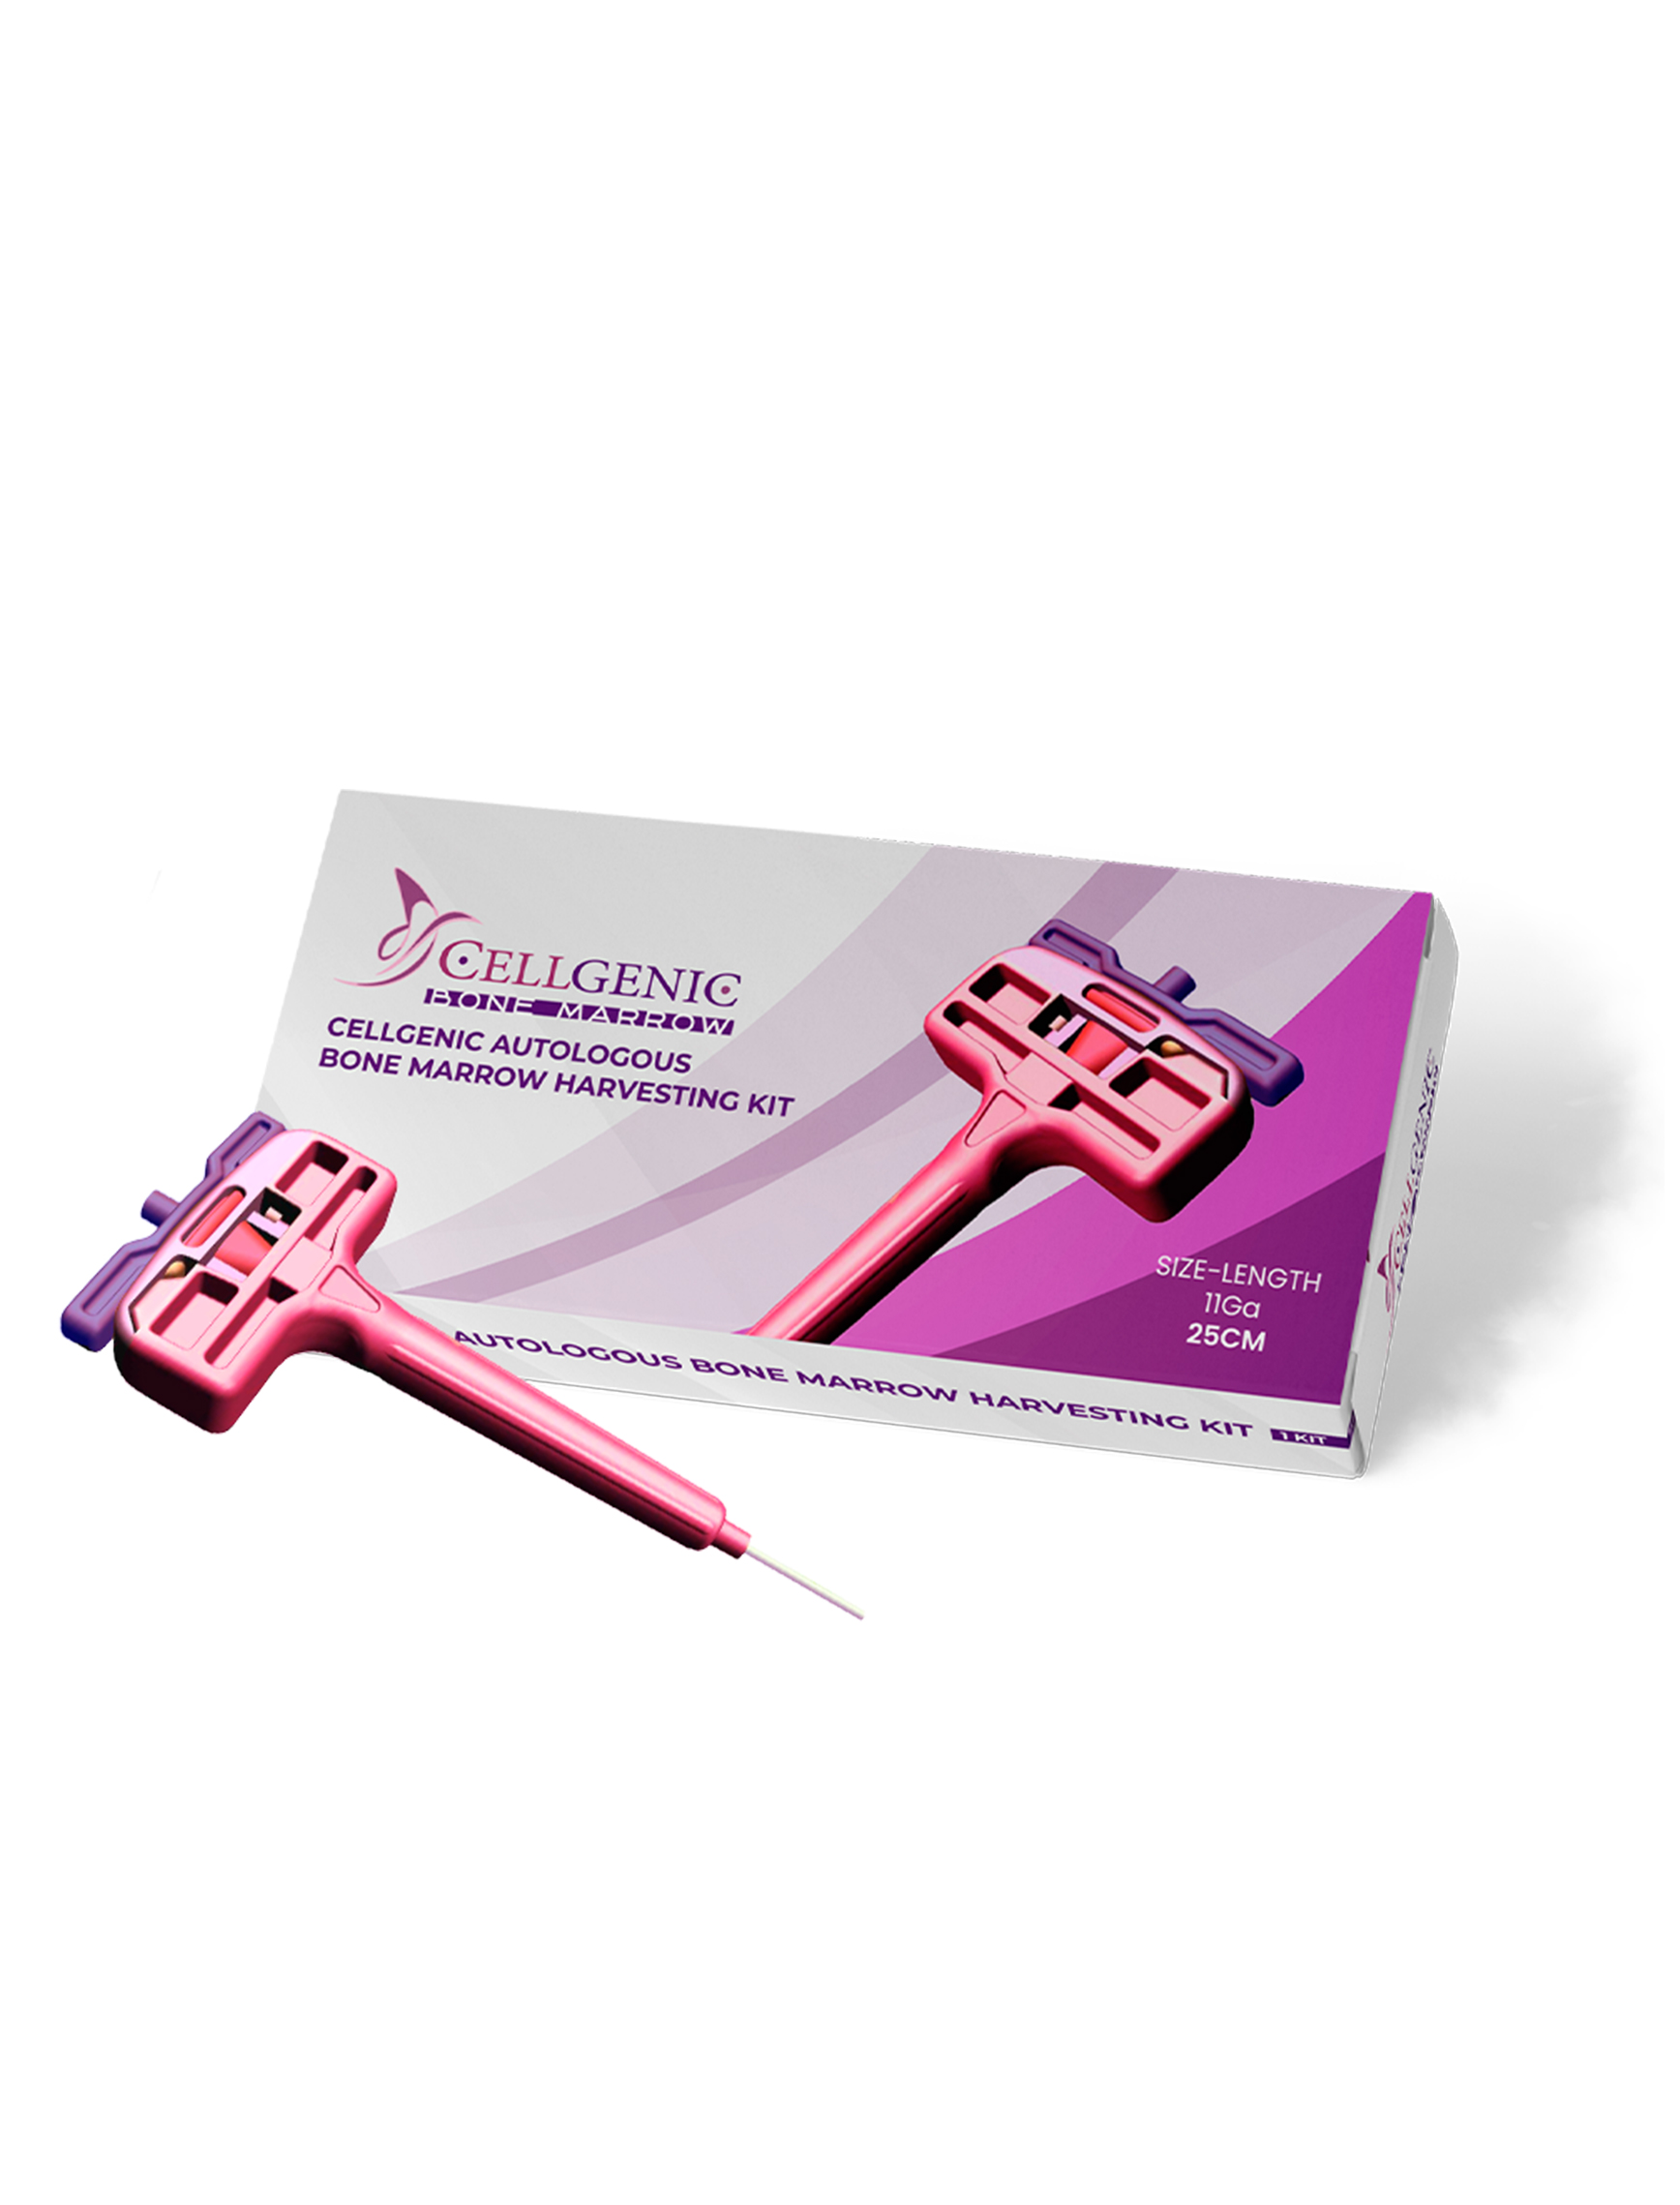 Bone Marrow Cellgenic kit needle